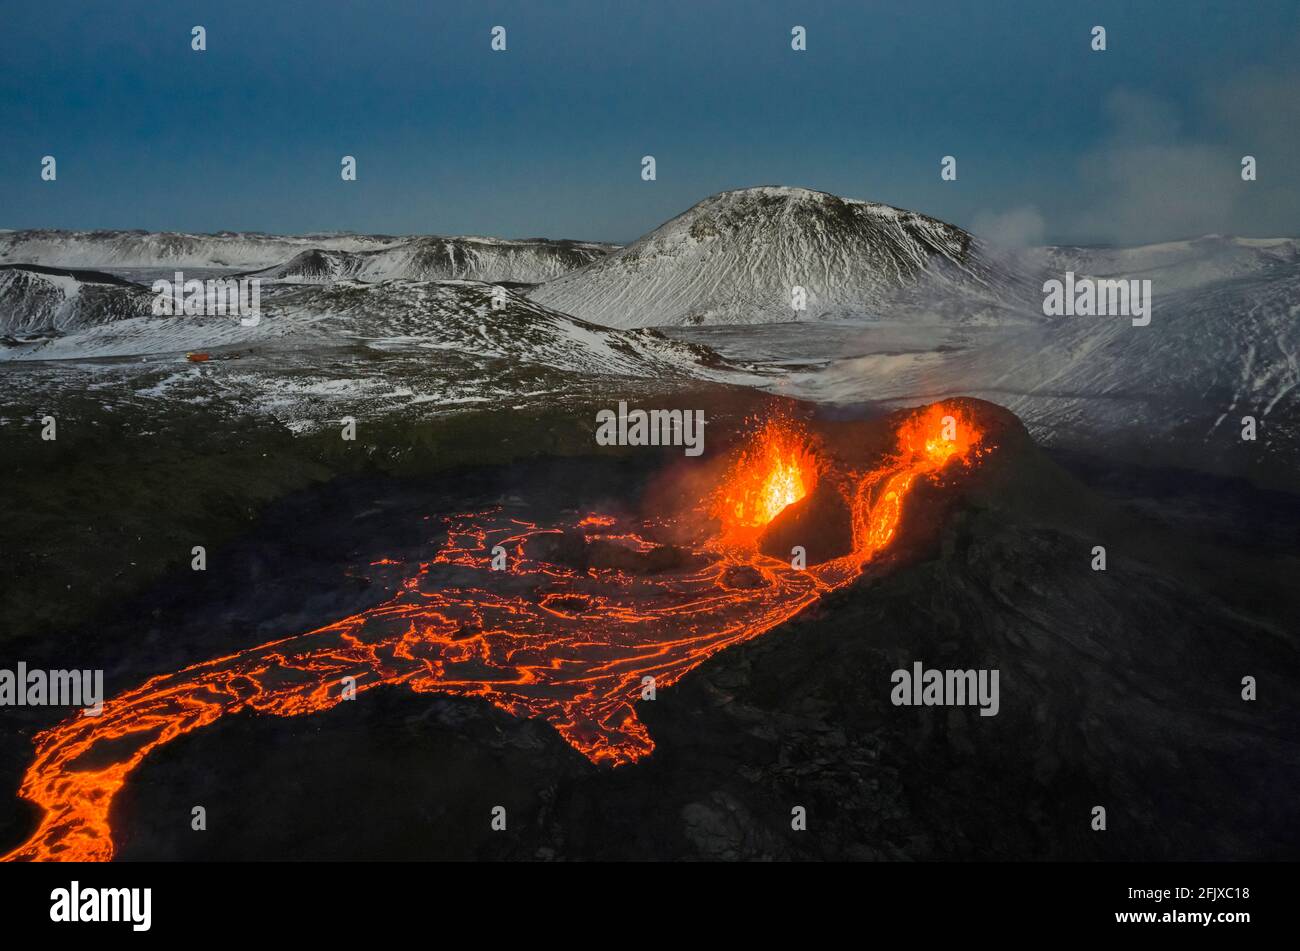 Volcano erupting with hot orange lava Stock Photo